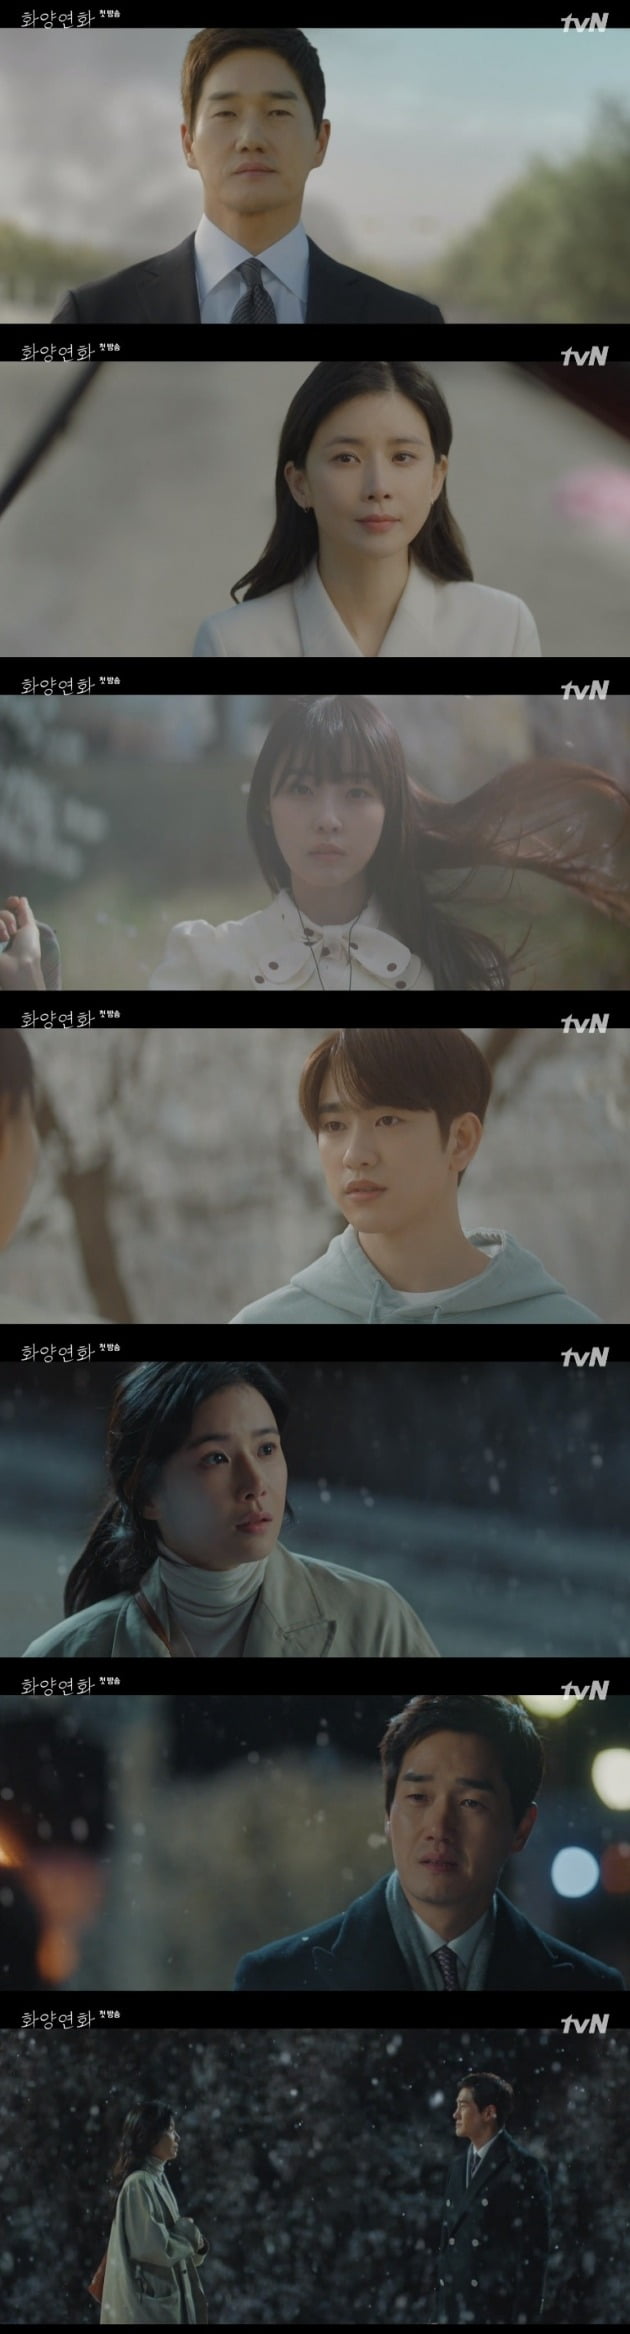 tvN '화양연화' 방송화면 캡처. 